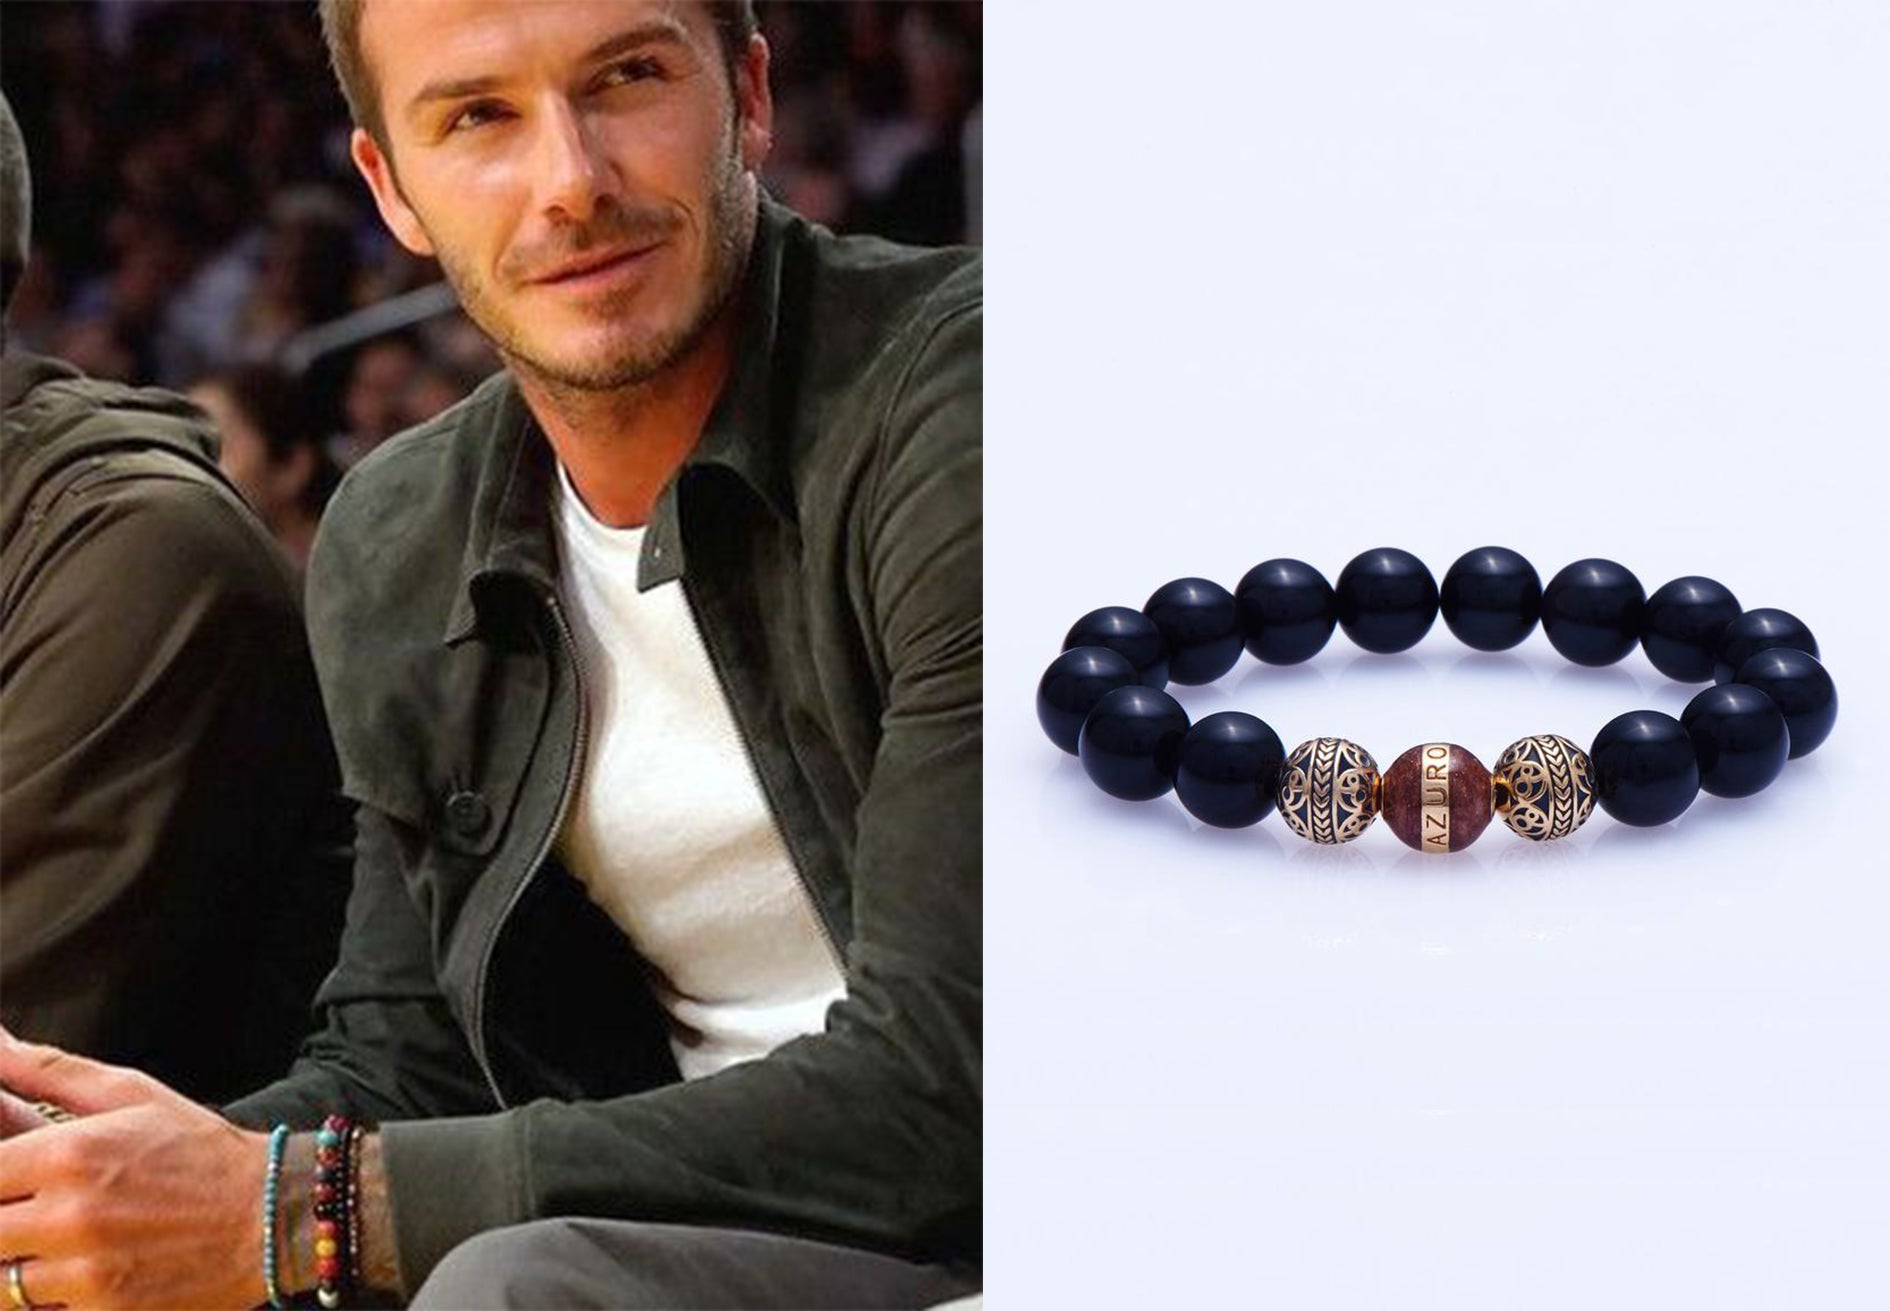 Stone Bracelet worn by David Beckham